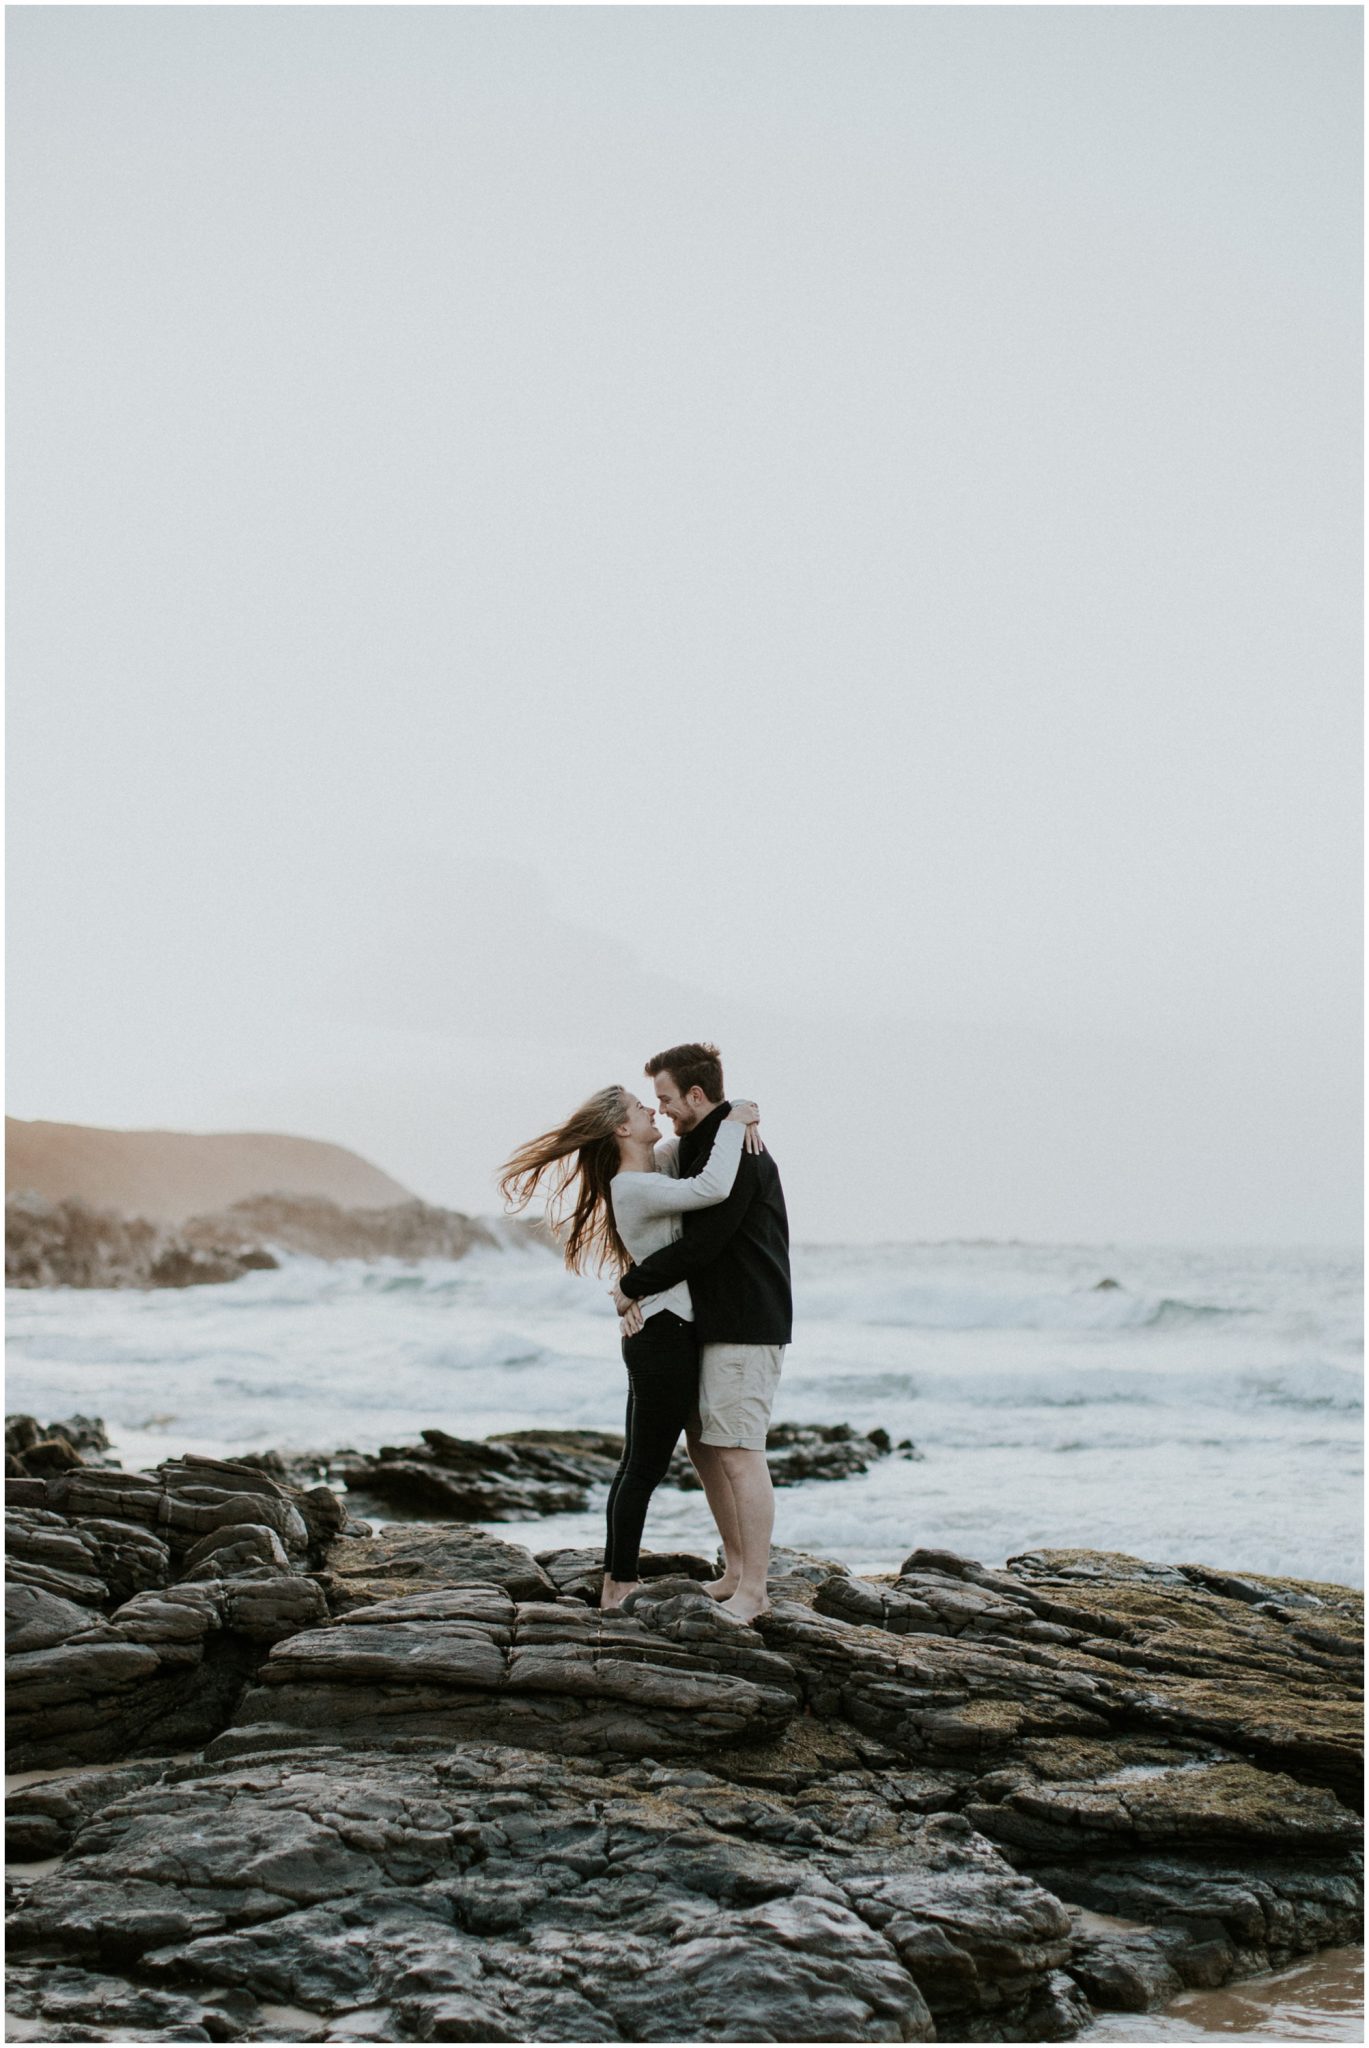 Maryke Albertyn Photography Best Award Winning Destination Wedding Photographer from Johannesburg Sunrise Beach Couple Engagement Shoot